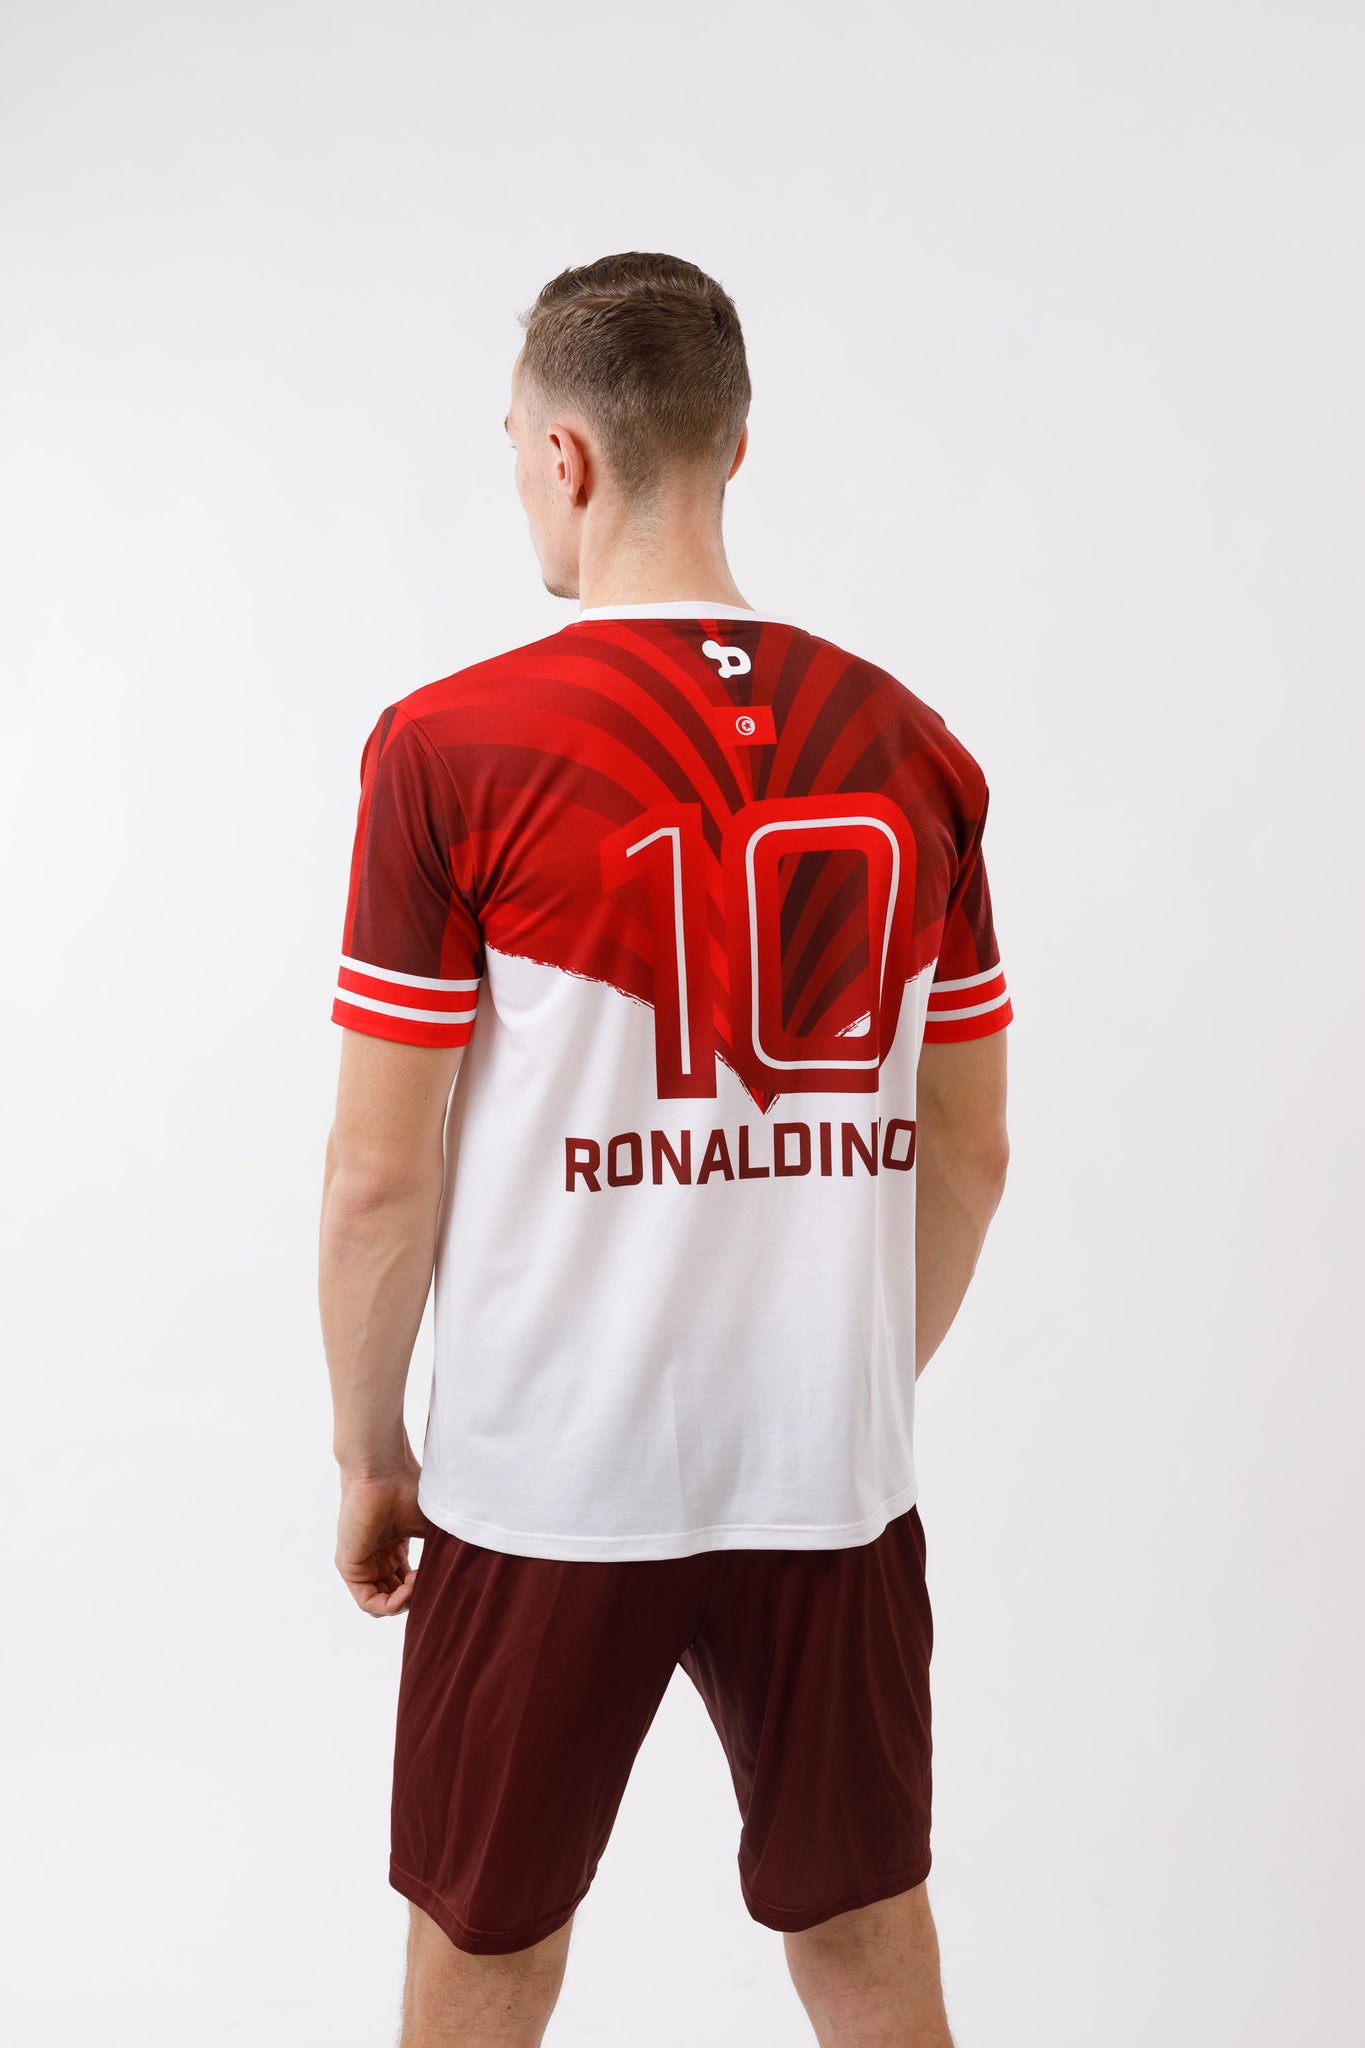 Ronaldinho Tunisia Jersey/Camisa